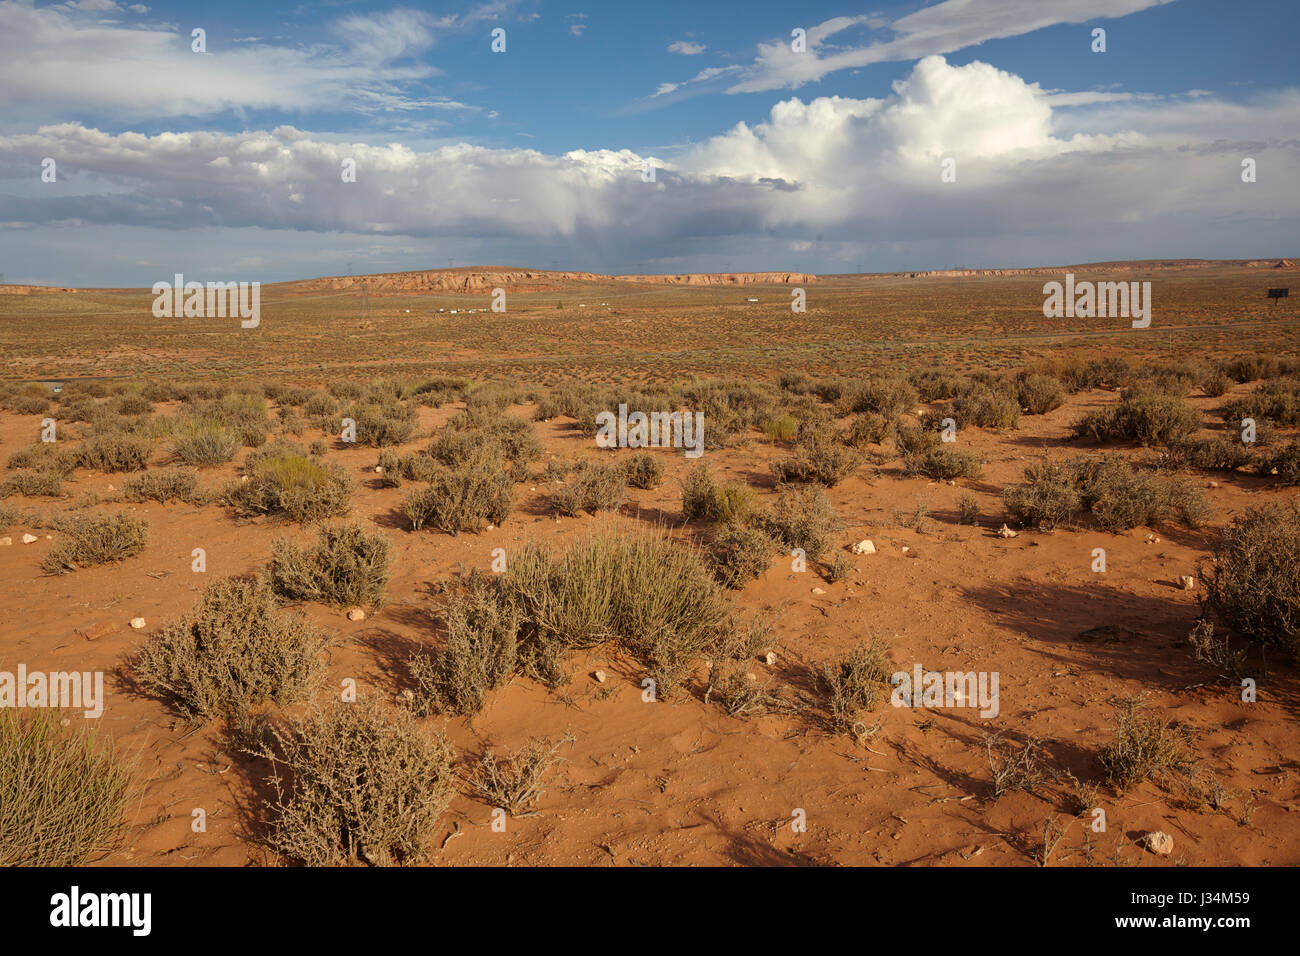 Landscape of the desert in Arizona, United States Stock Photo